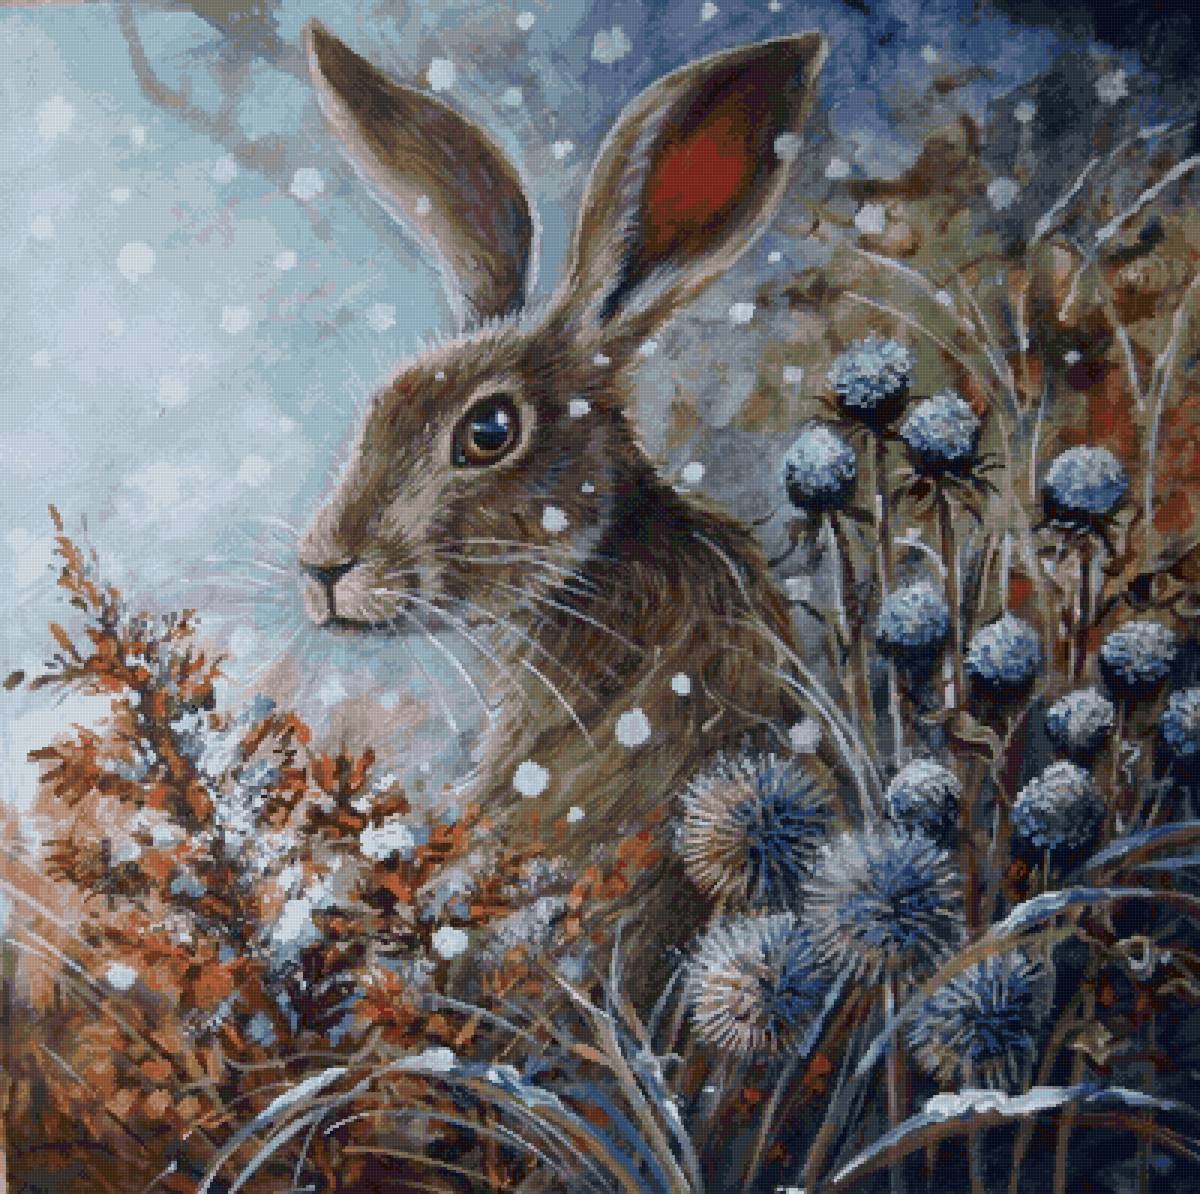 Snow Rabbit illustrated